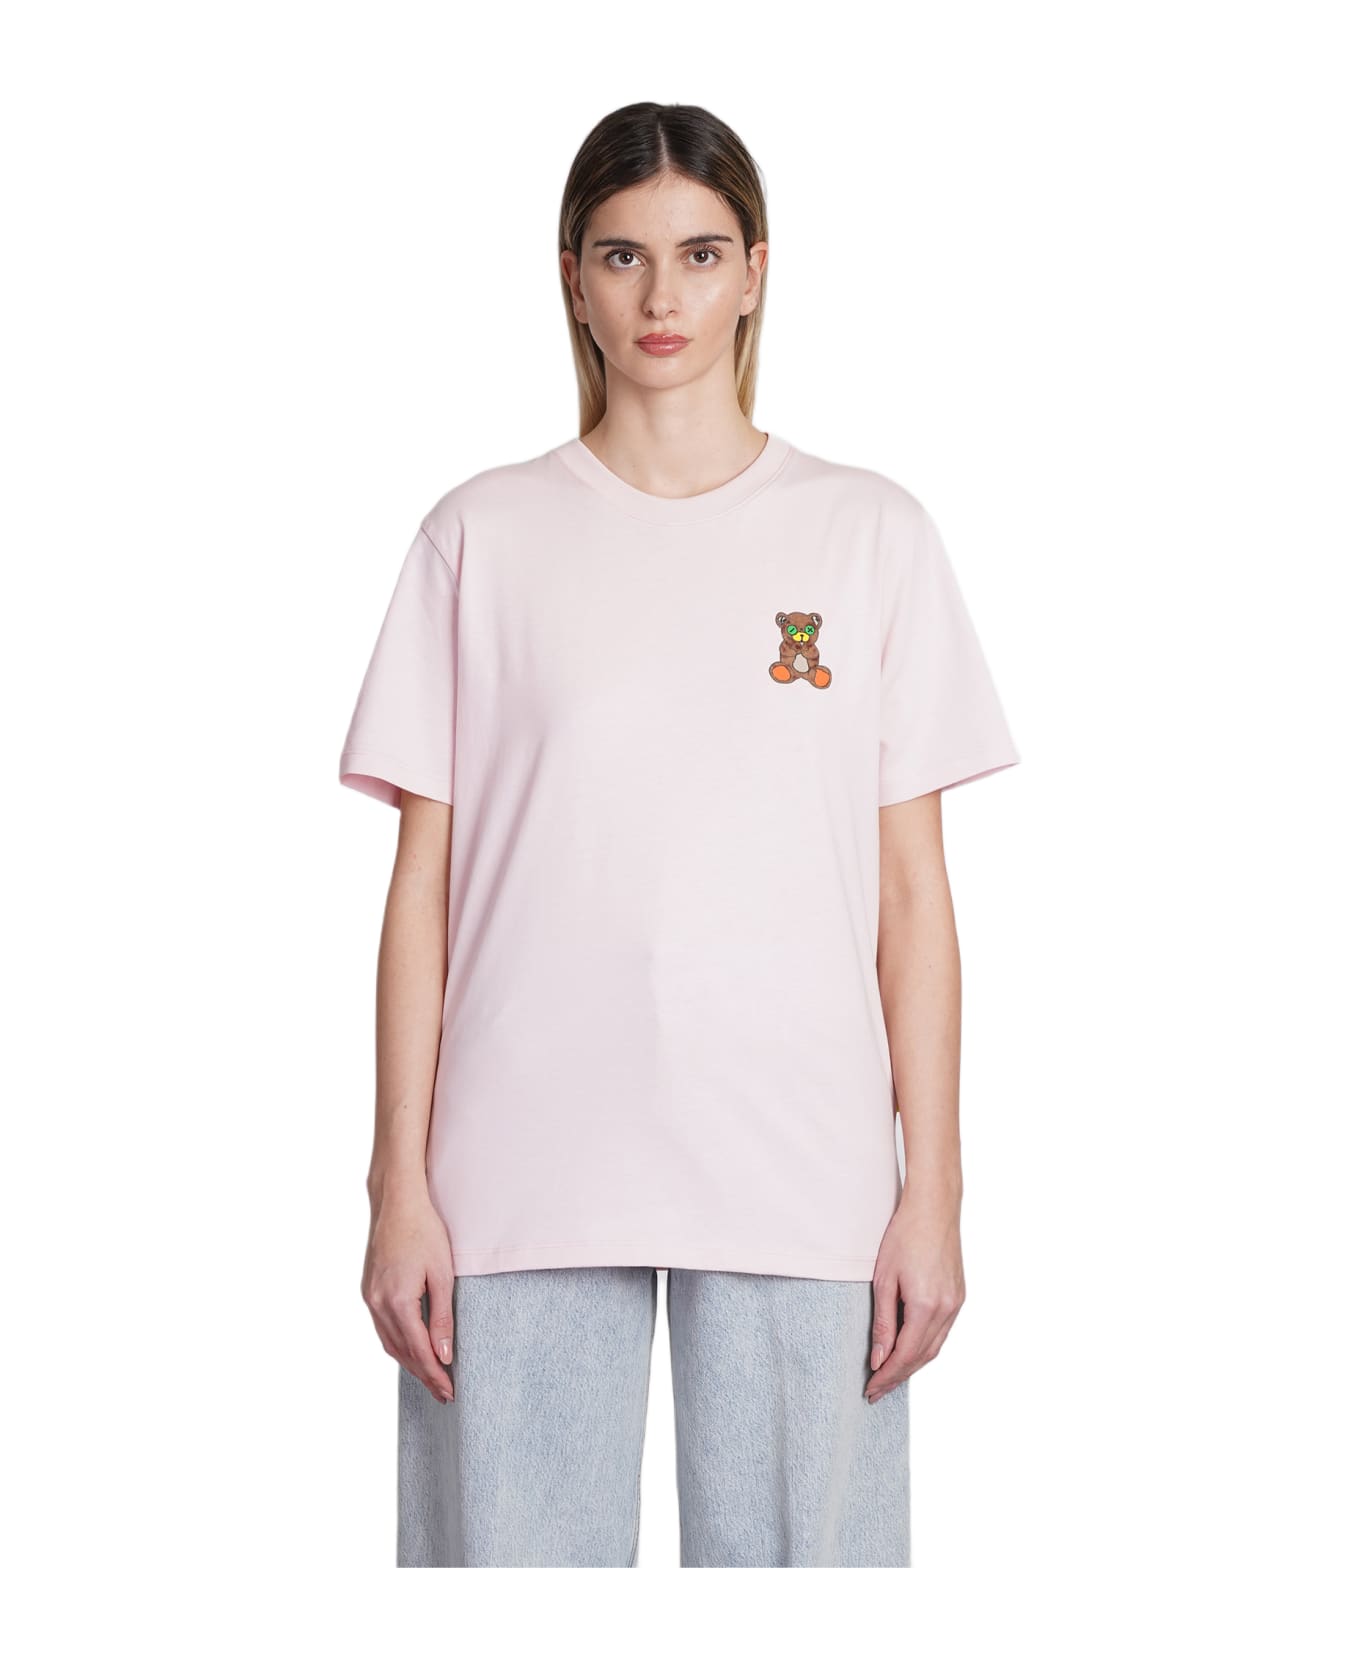 Barrow T-shirt In Rose-pink Cotton - rose-pink